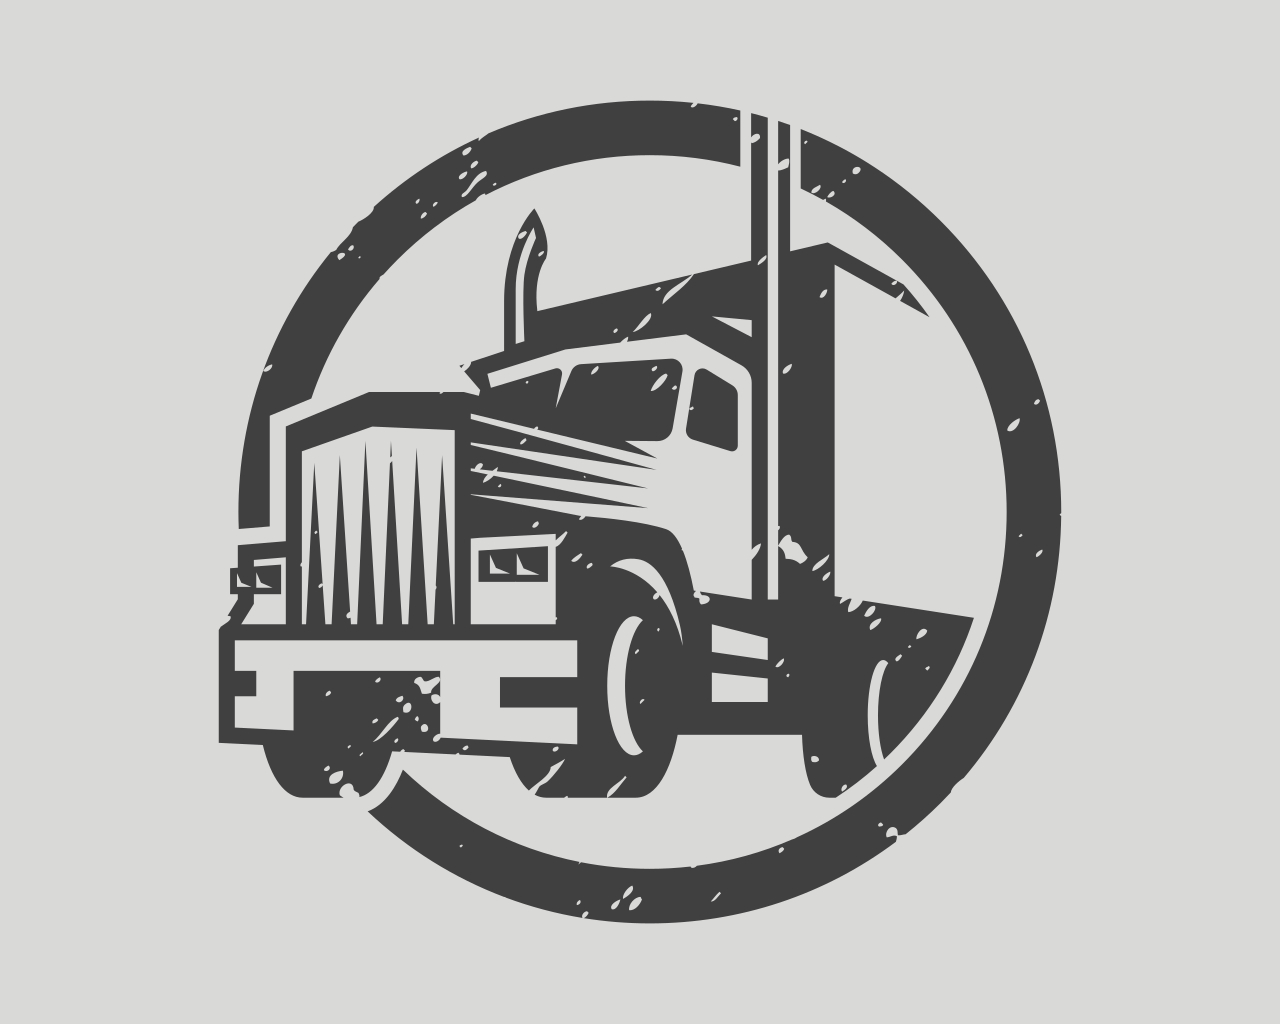 The trucker‘s Podcast, FYI